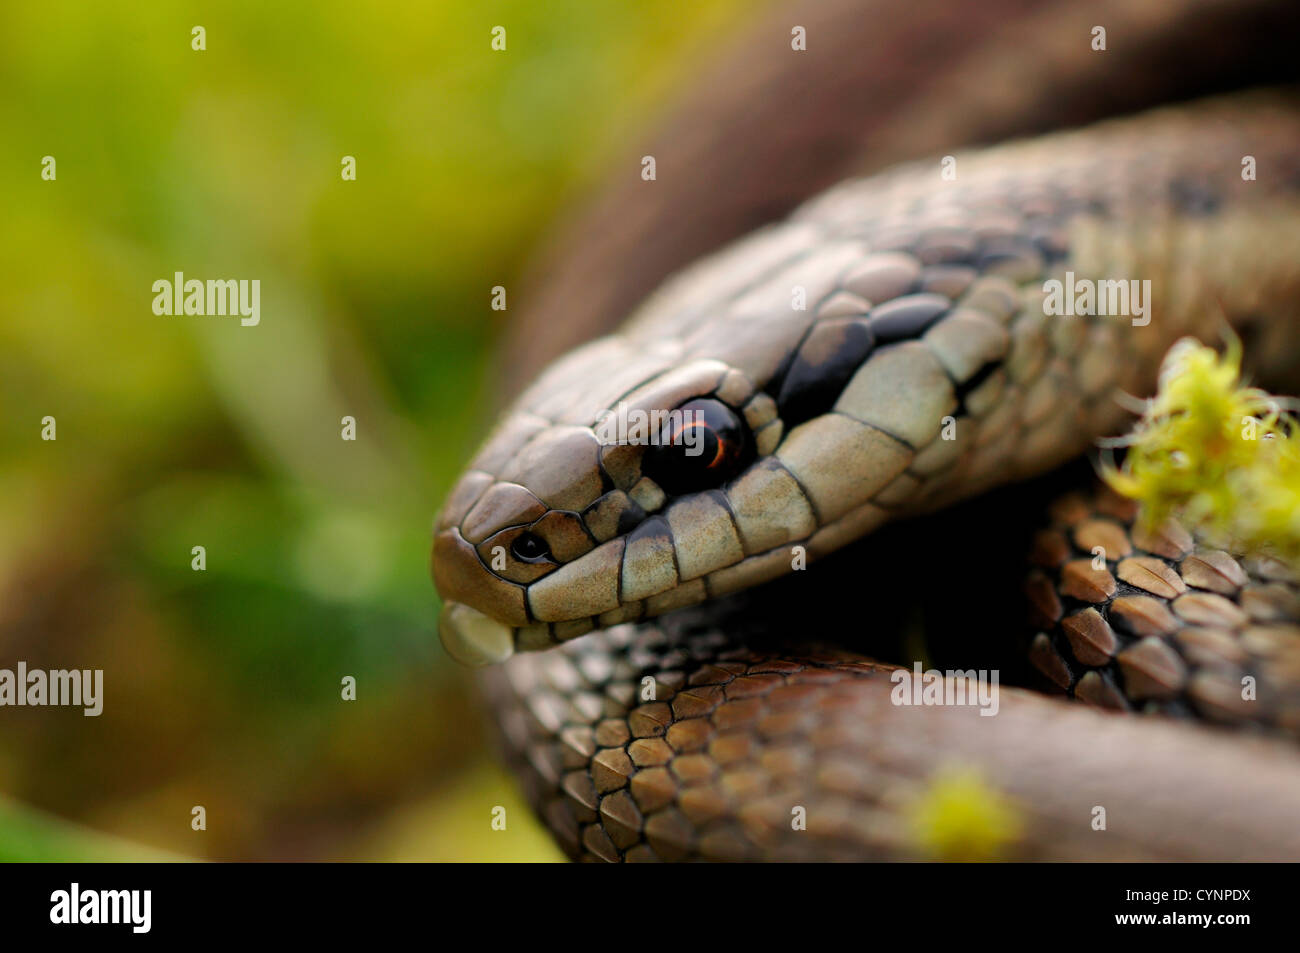 Common garter snake close-up Stock Photo